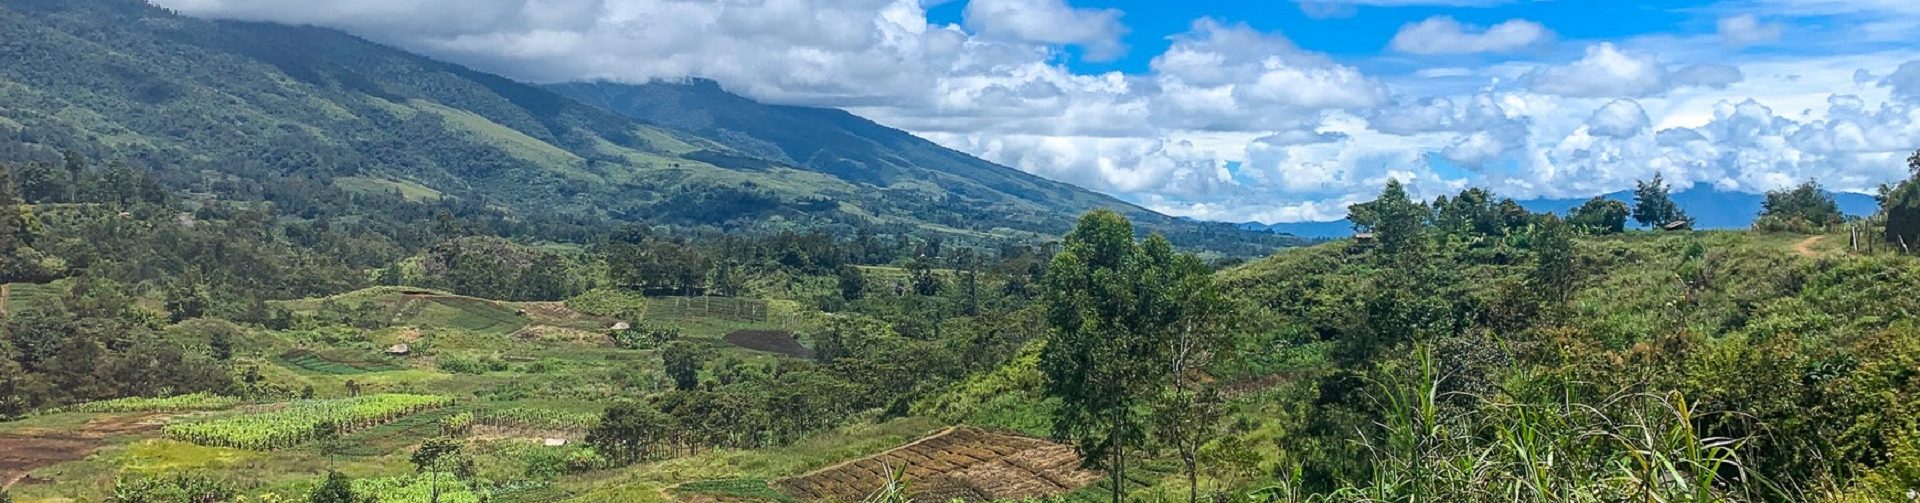 Promoting nonfarm businesses in Papua New Guinea can improve rural diets